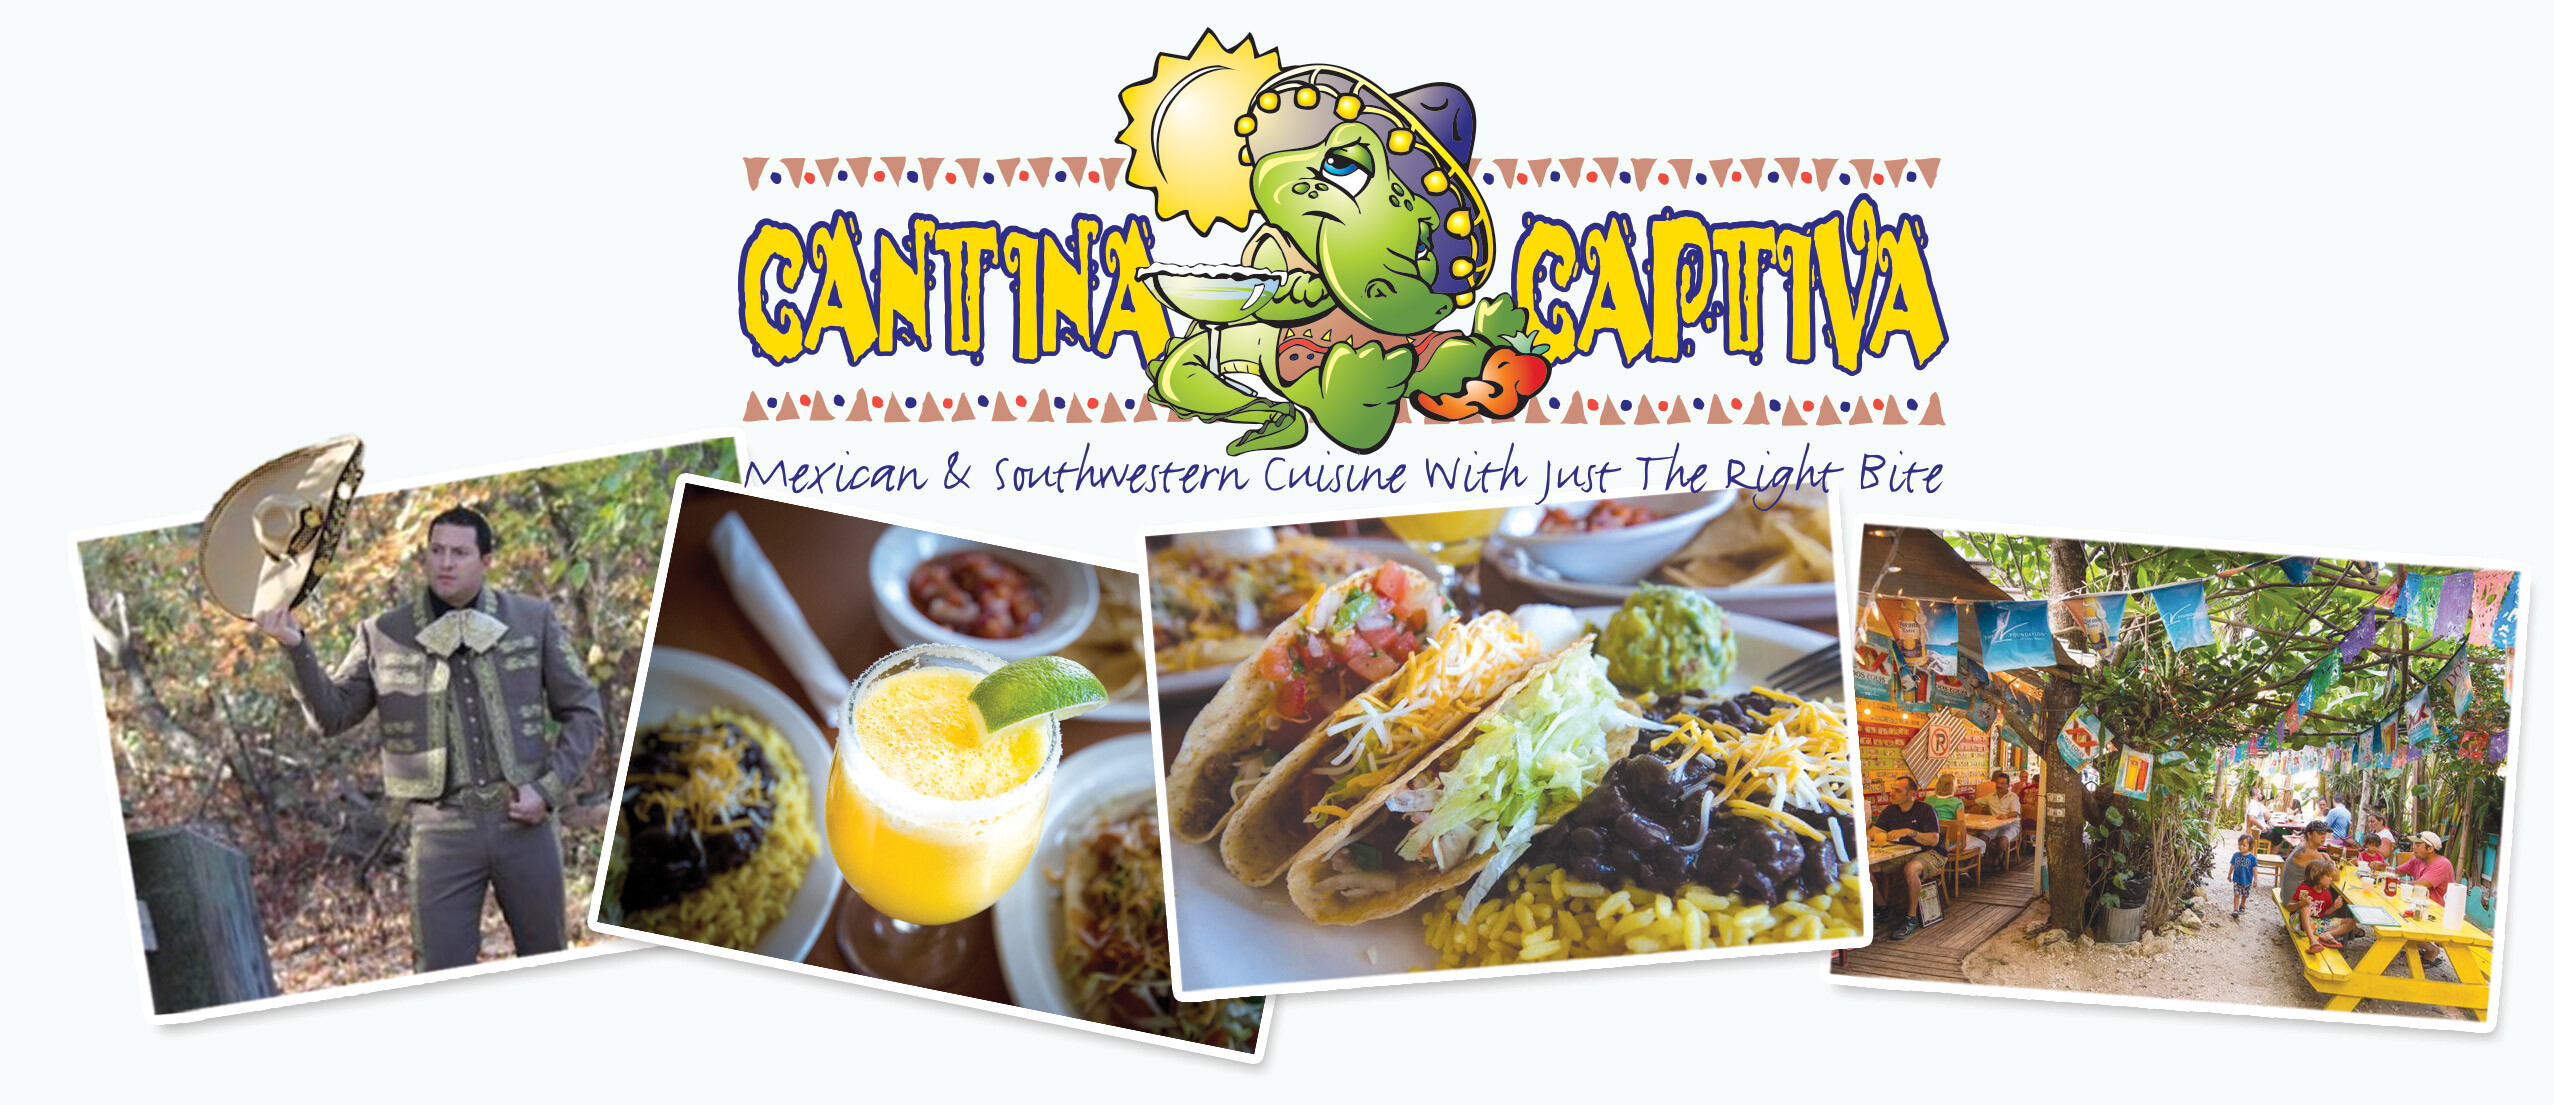 Cinco de Mayo Fiesta at Cantina Captiva